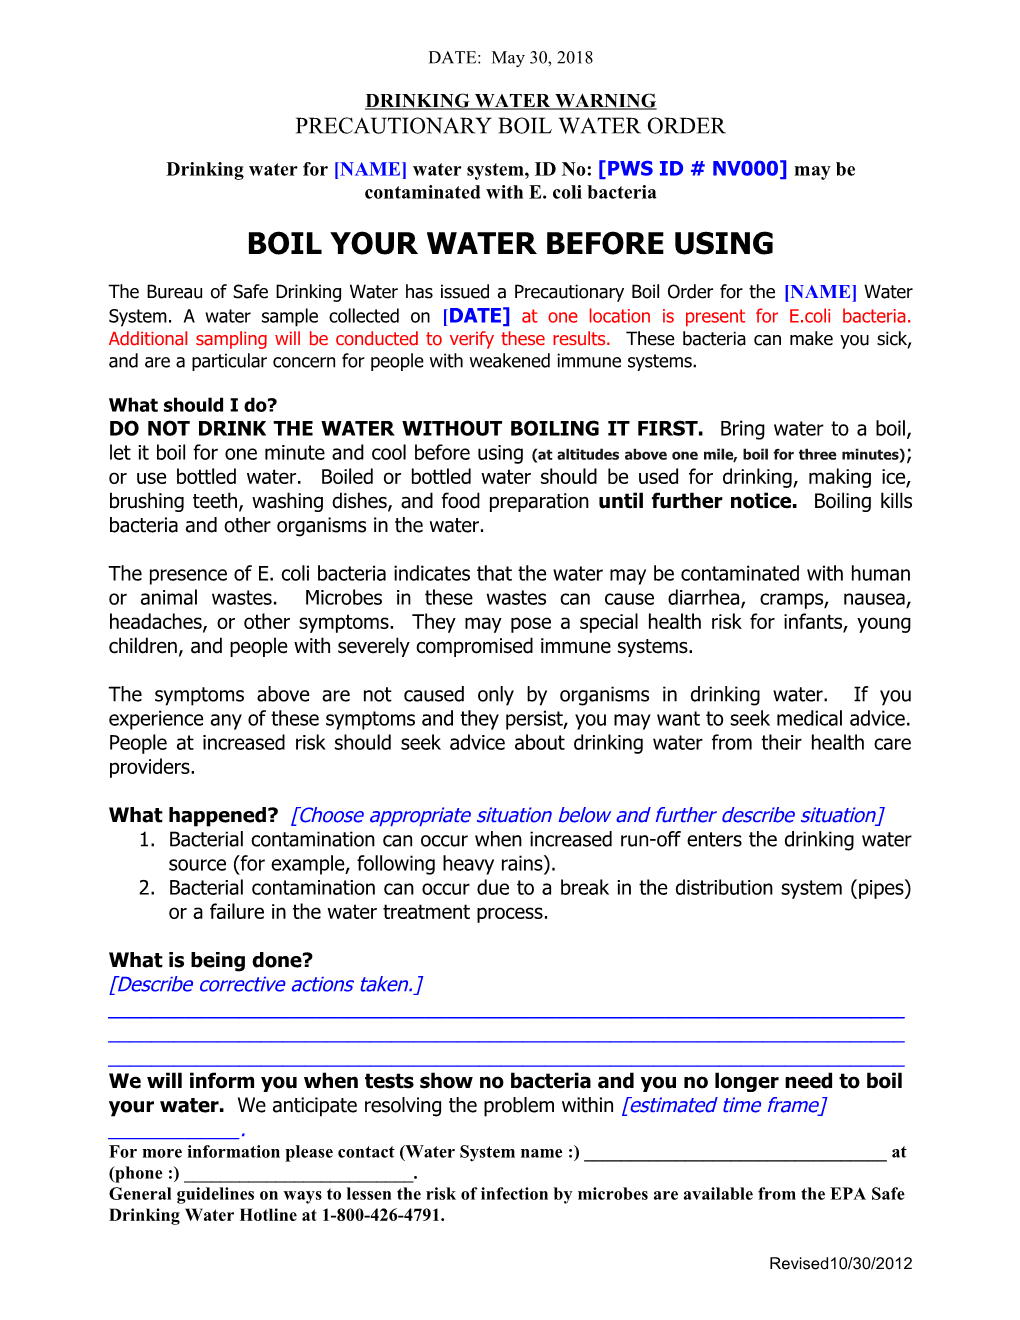 Drinking Water Warning s2